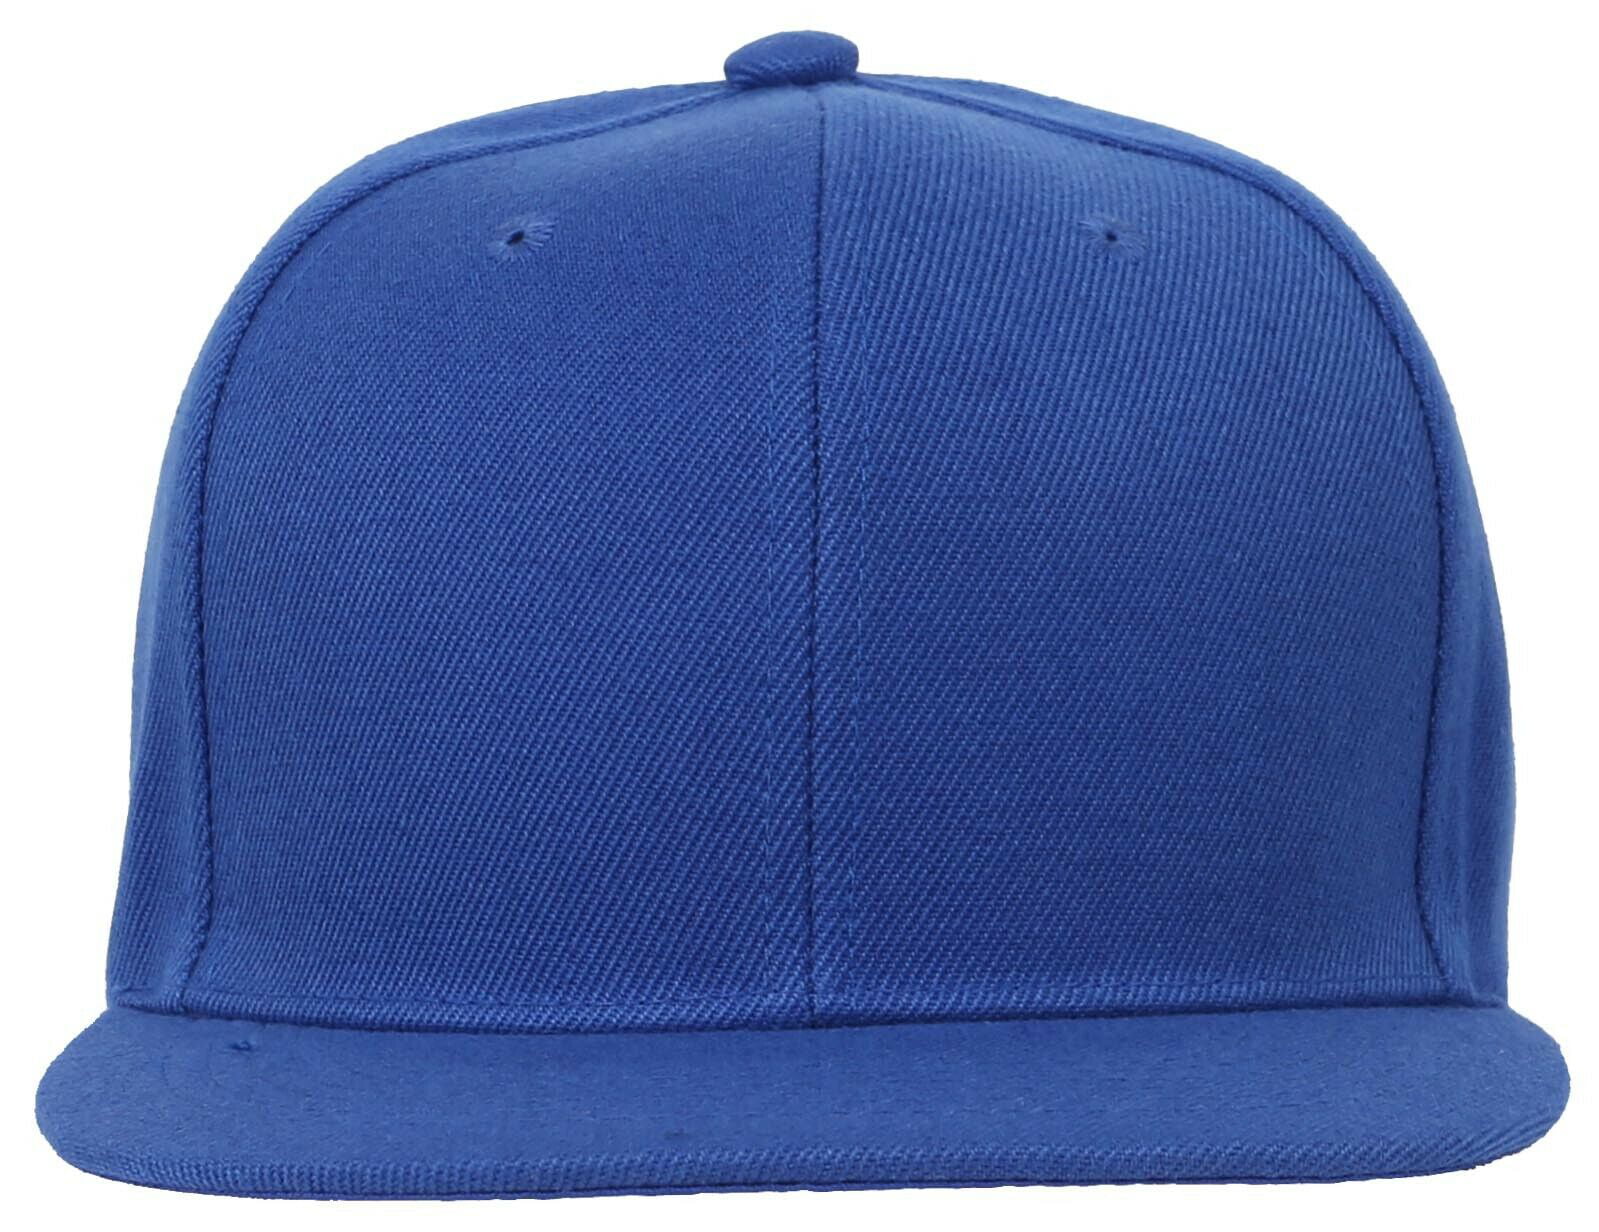 Classic Snapback Baseball Cap Plain Blank Snap Back Hat Flat Bill Hat Camo Mint 7fc050 Royal